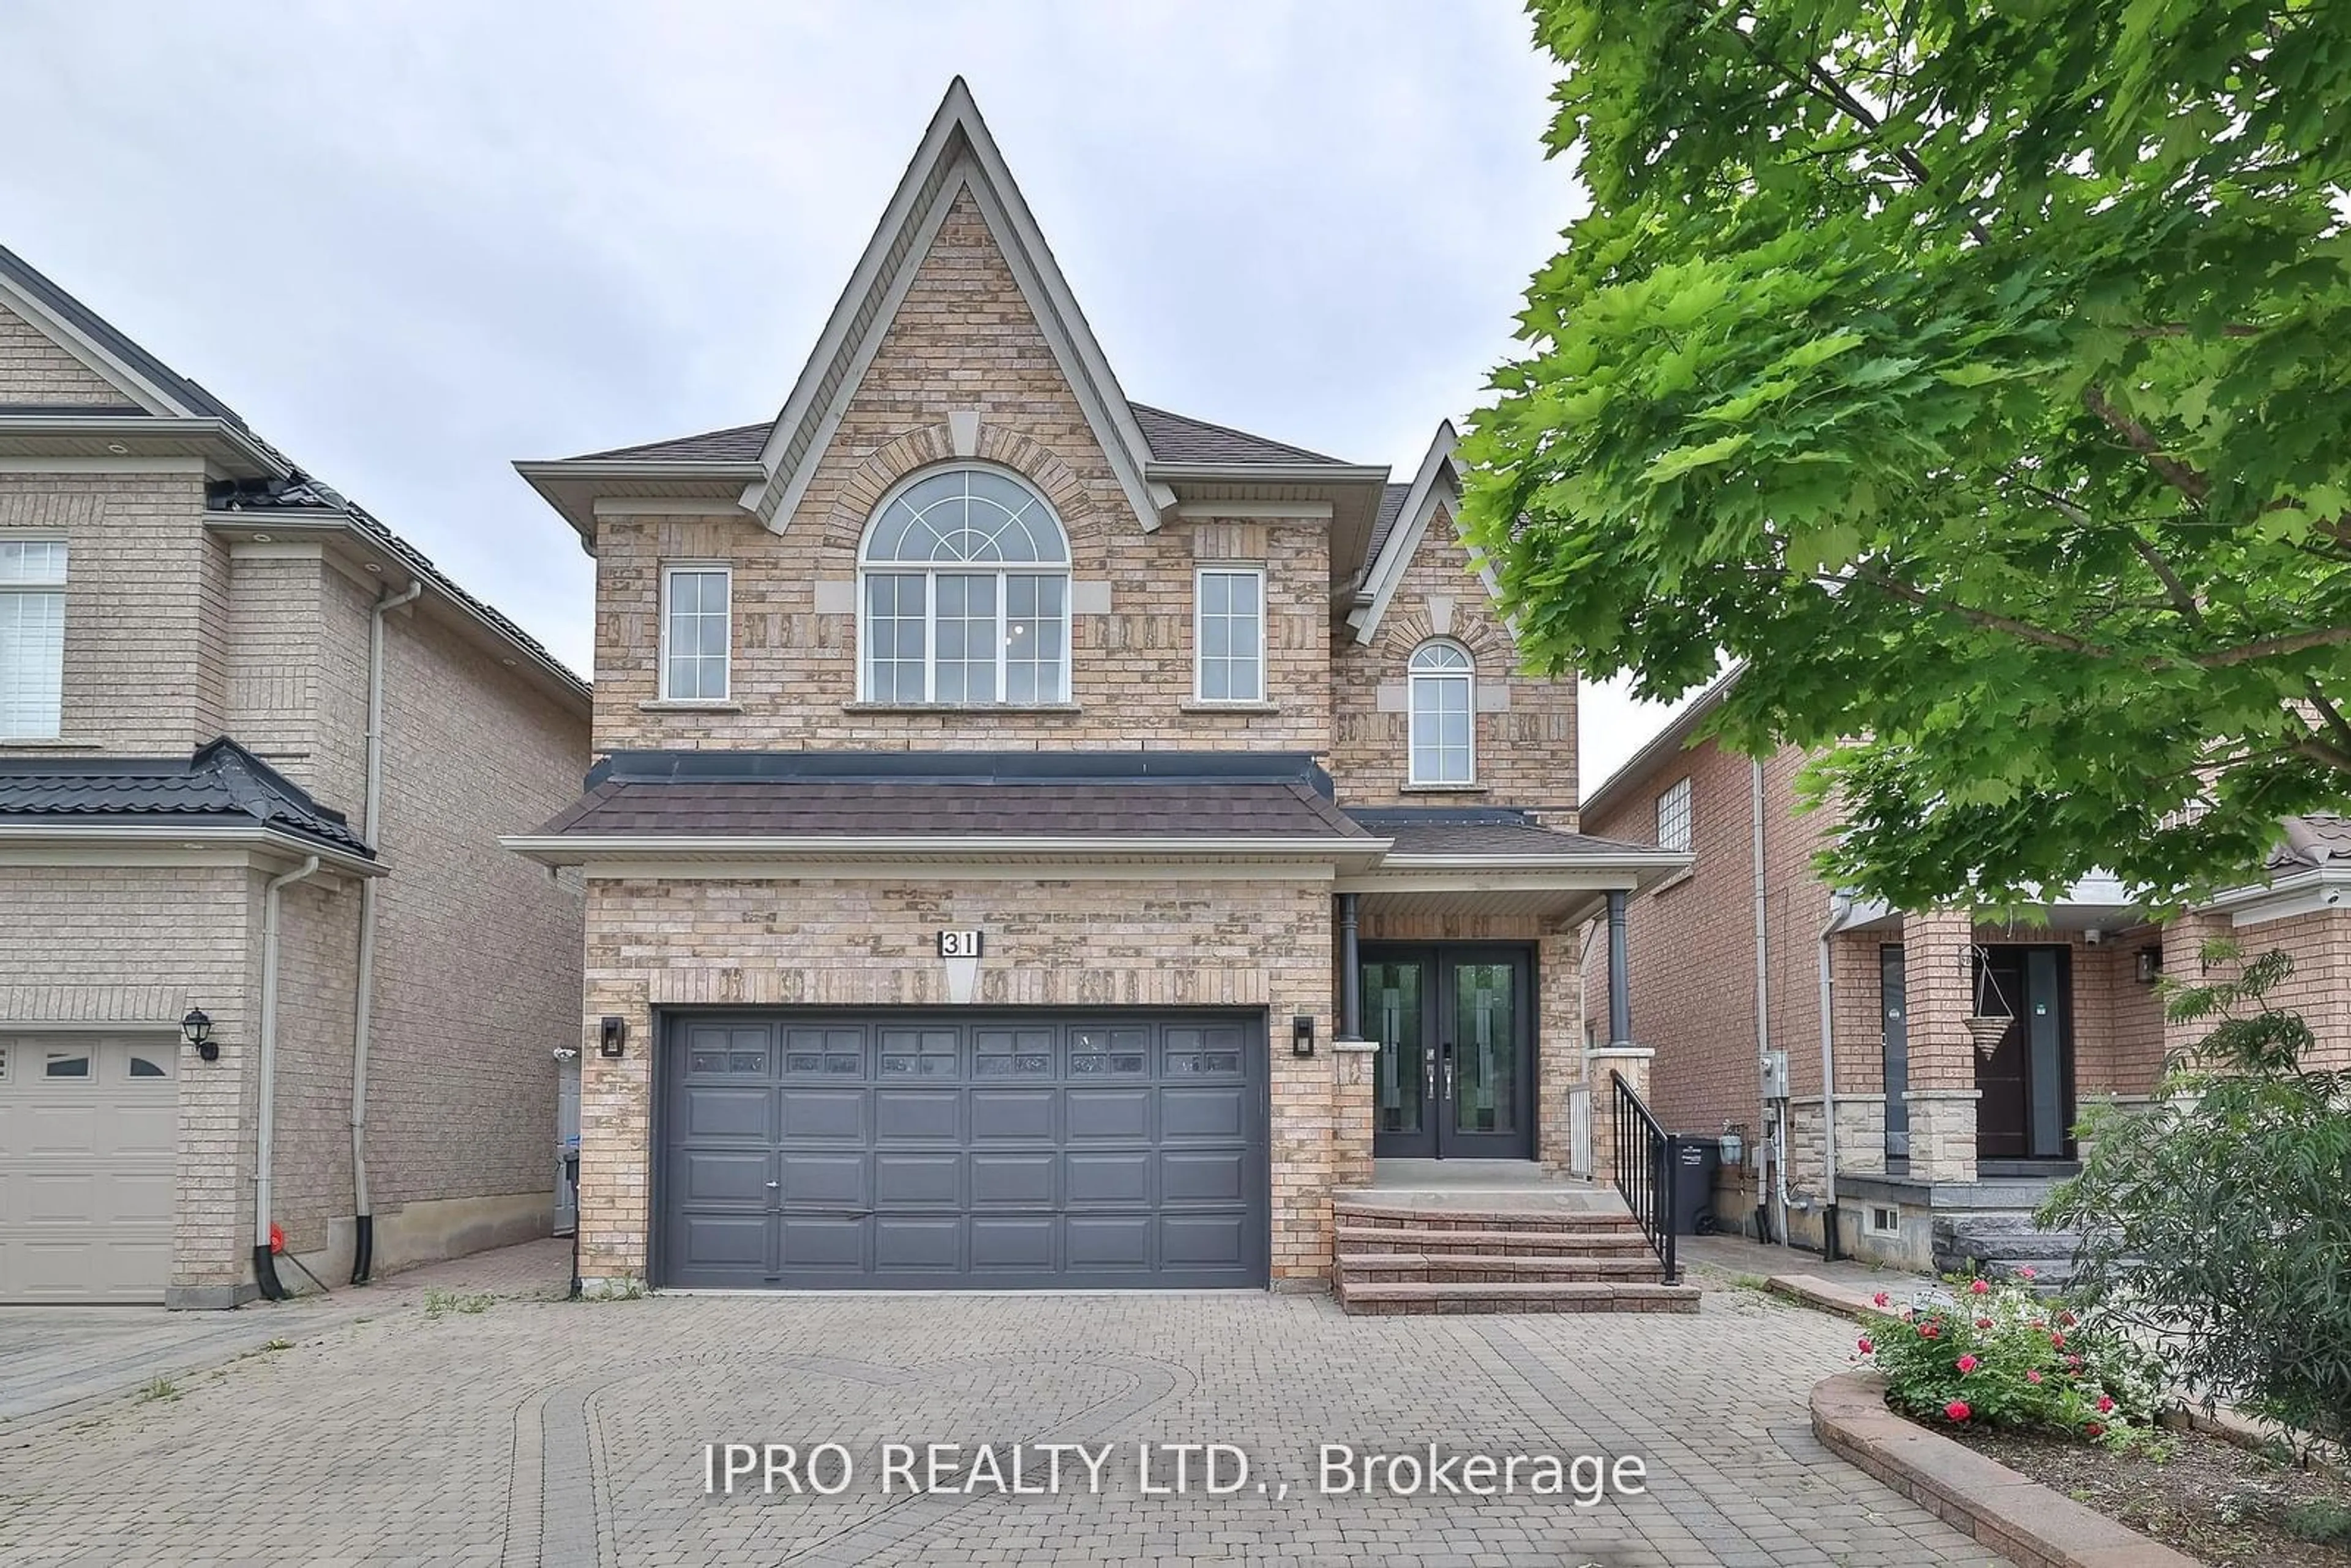 Home with brick exterior material for 31 Eastbrook Way, Brampton Ontario L6P 1K5